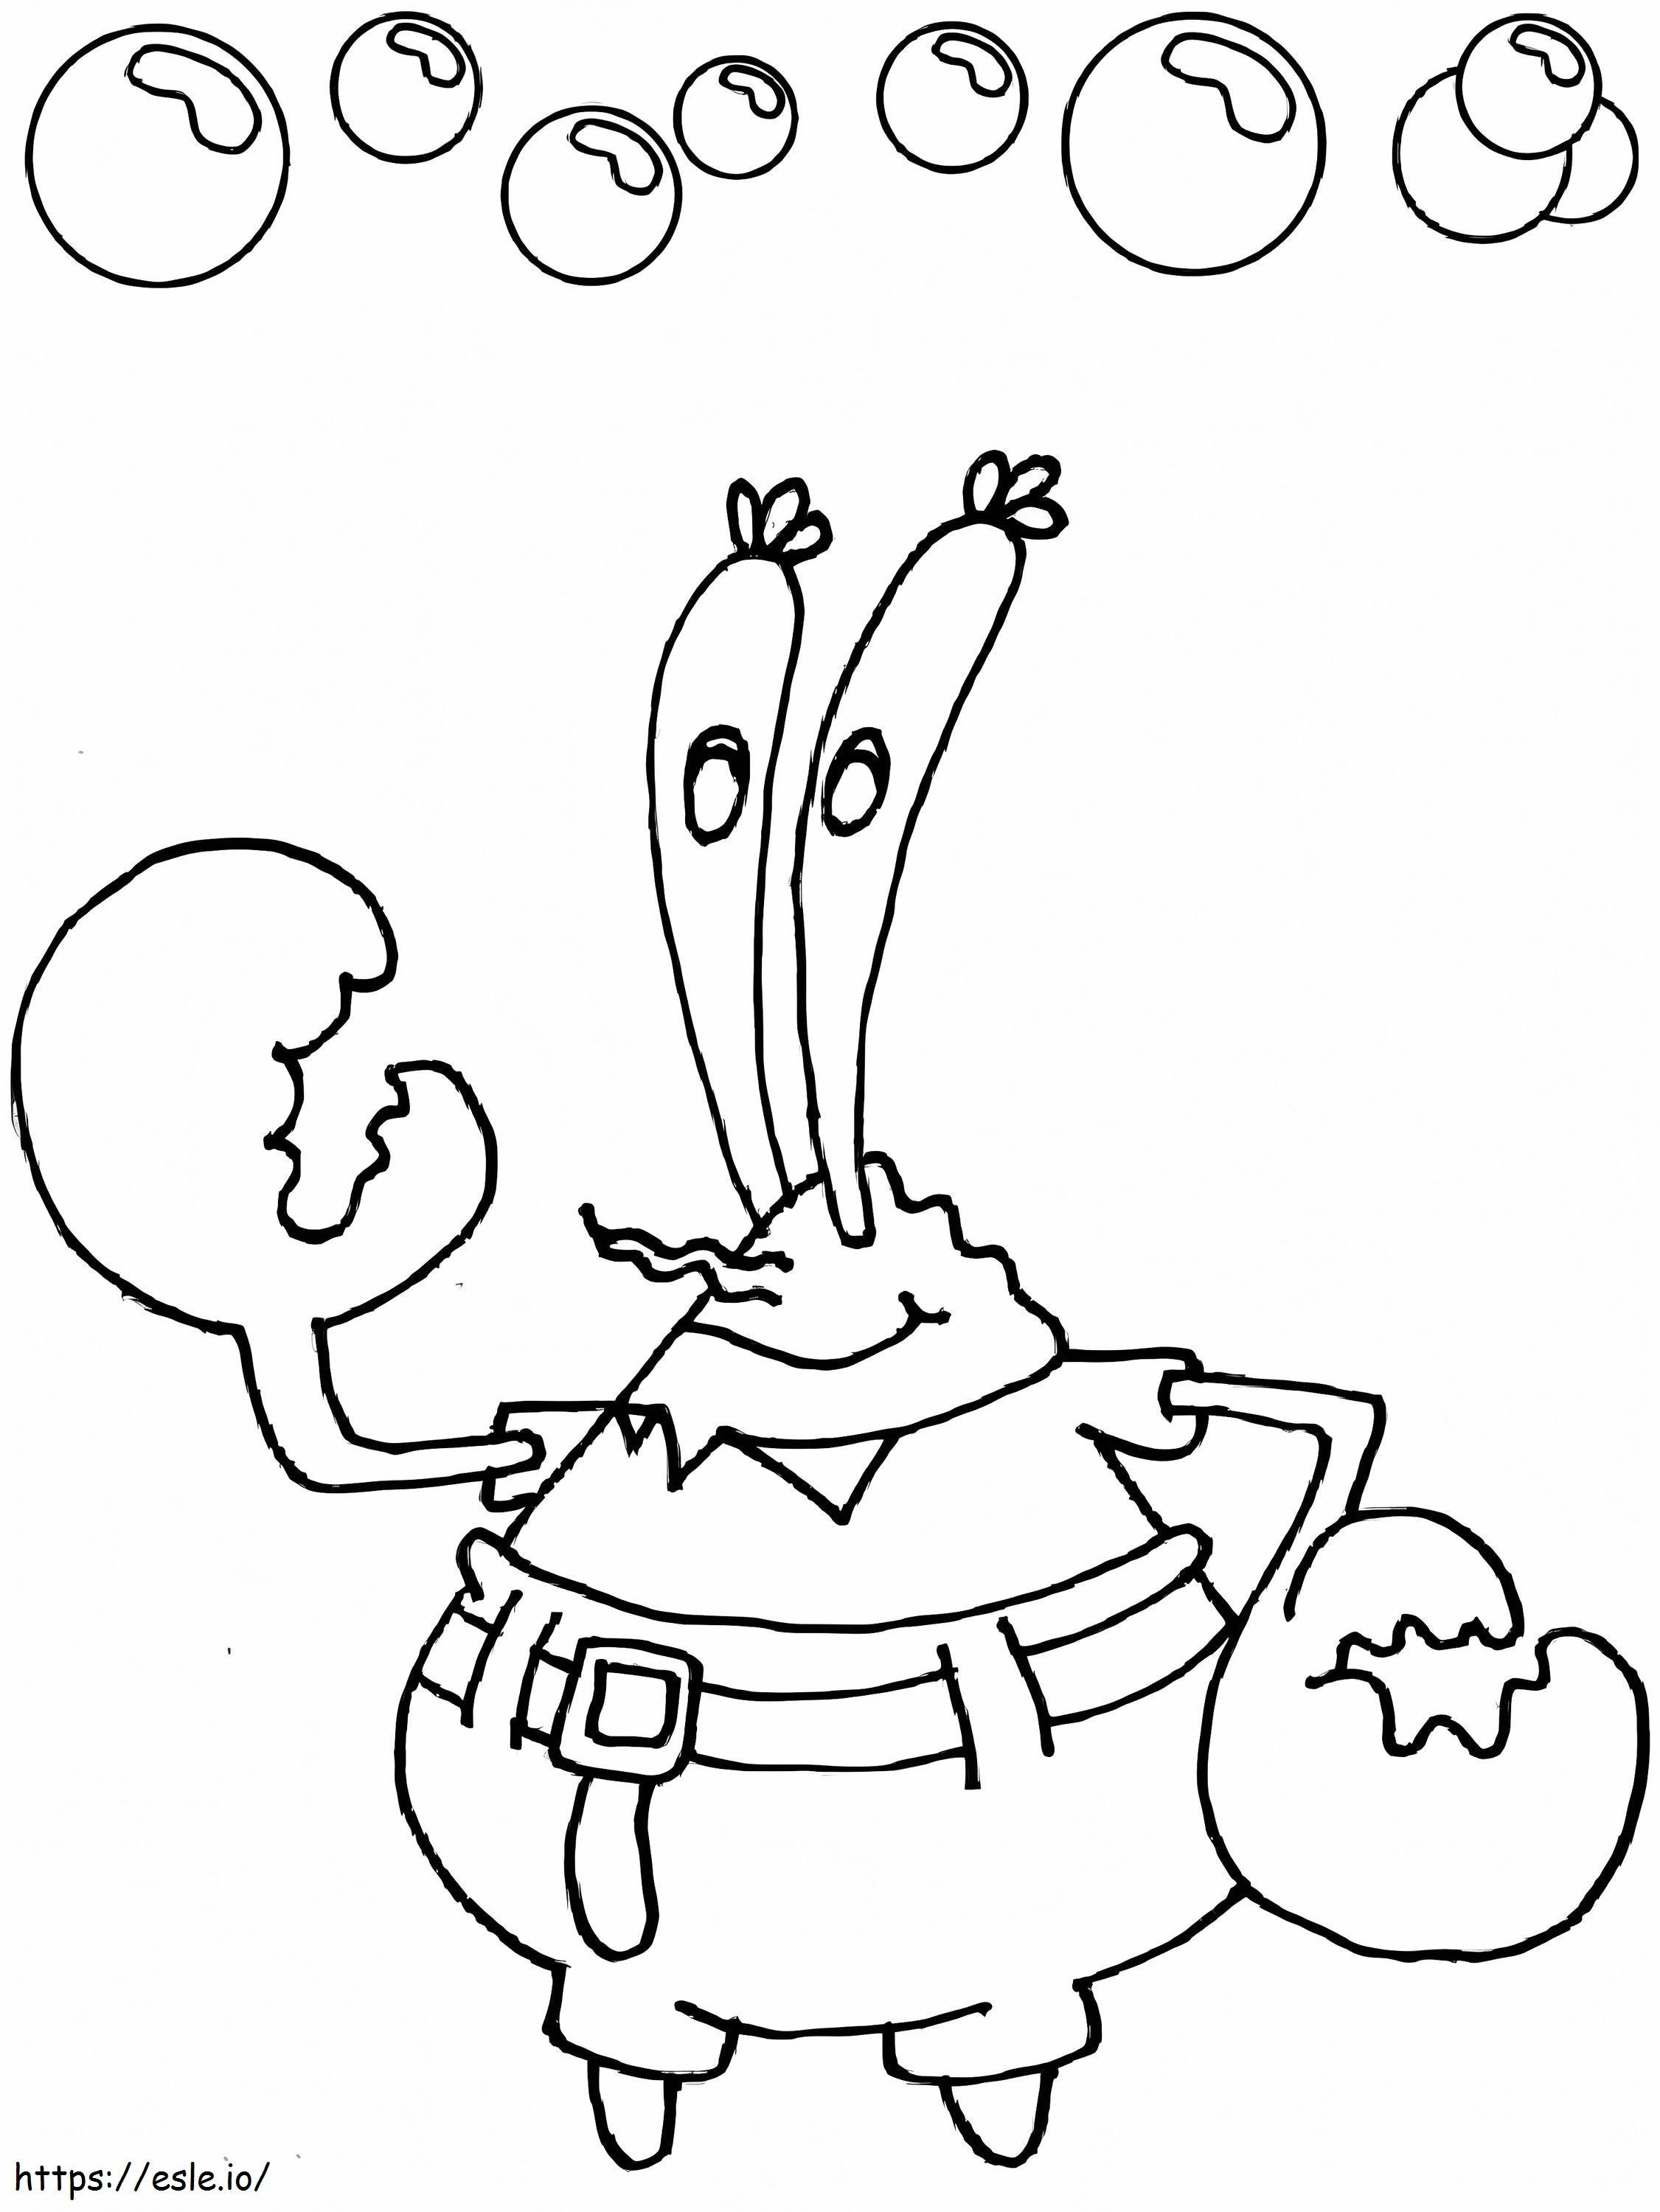 Domnul Crabs Basic de colorat